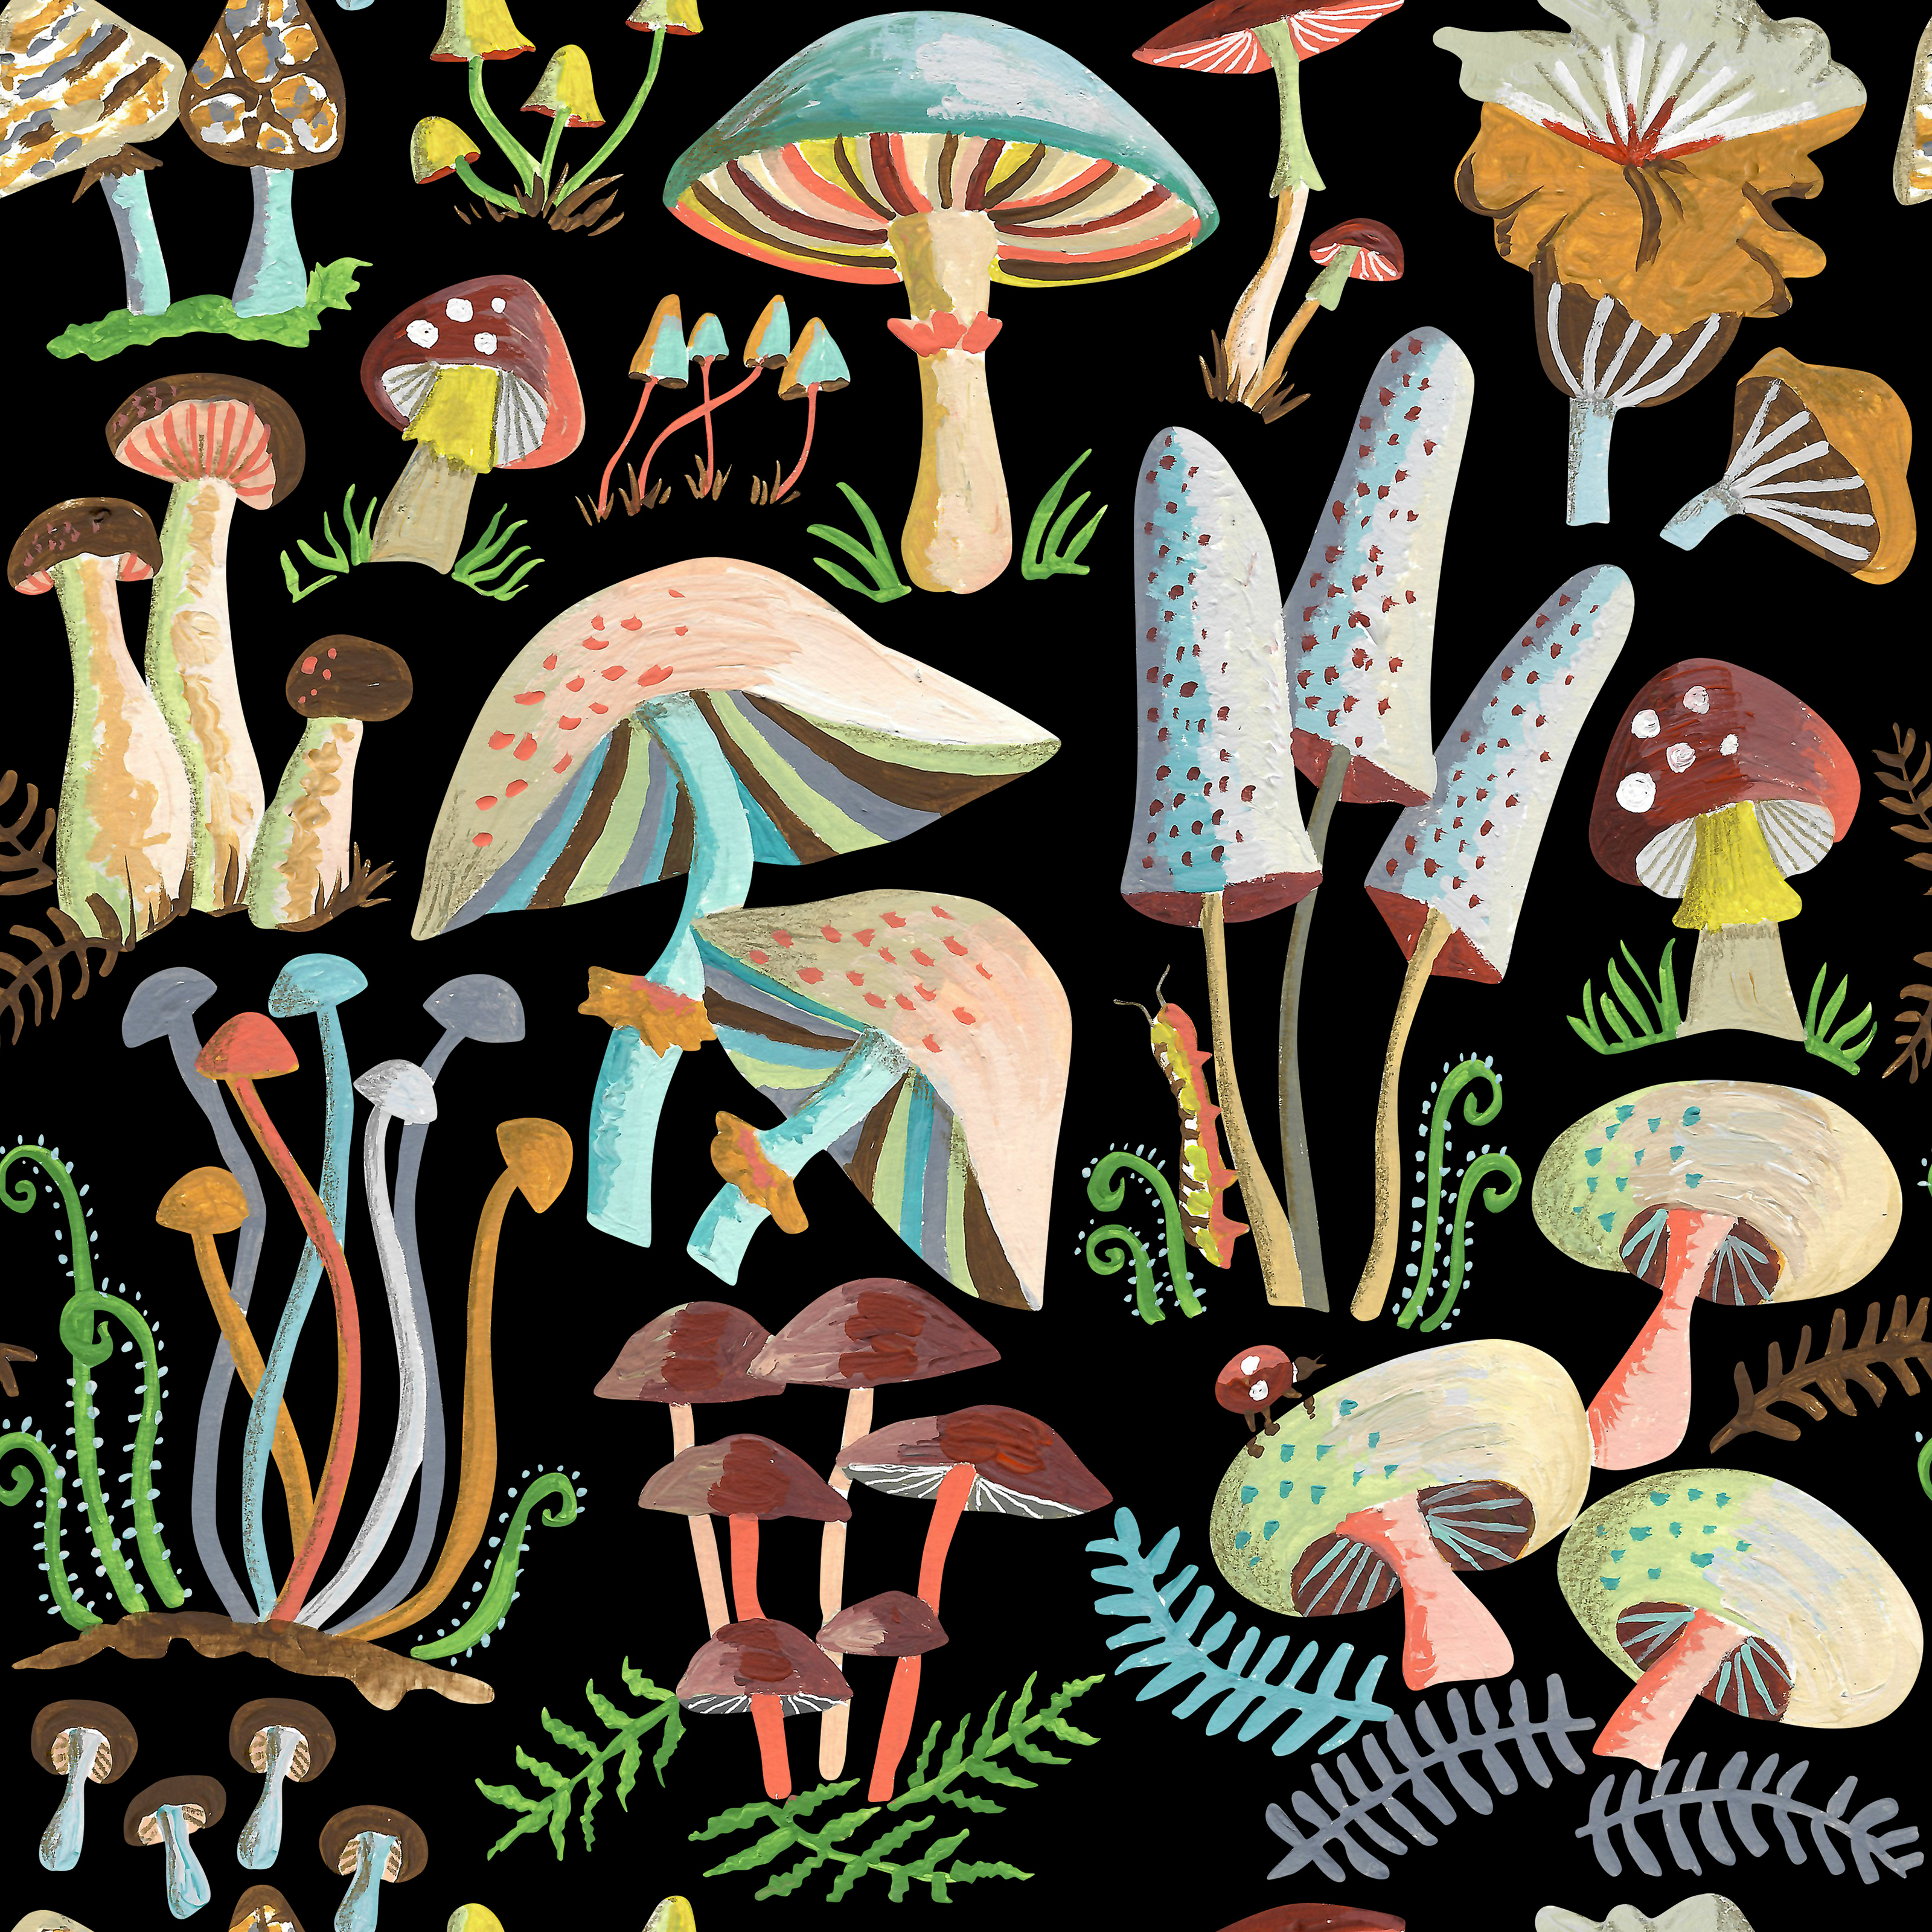 3605 Funky Mushrooms Images Stock Photos  Vectors  Shutterstock